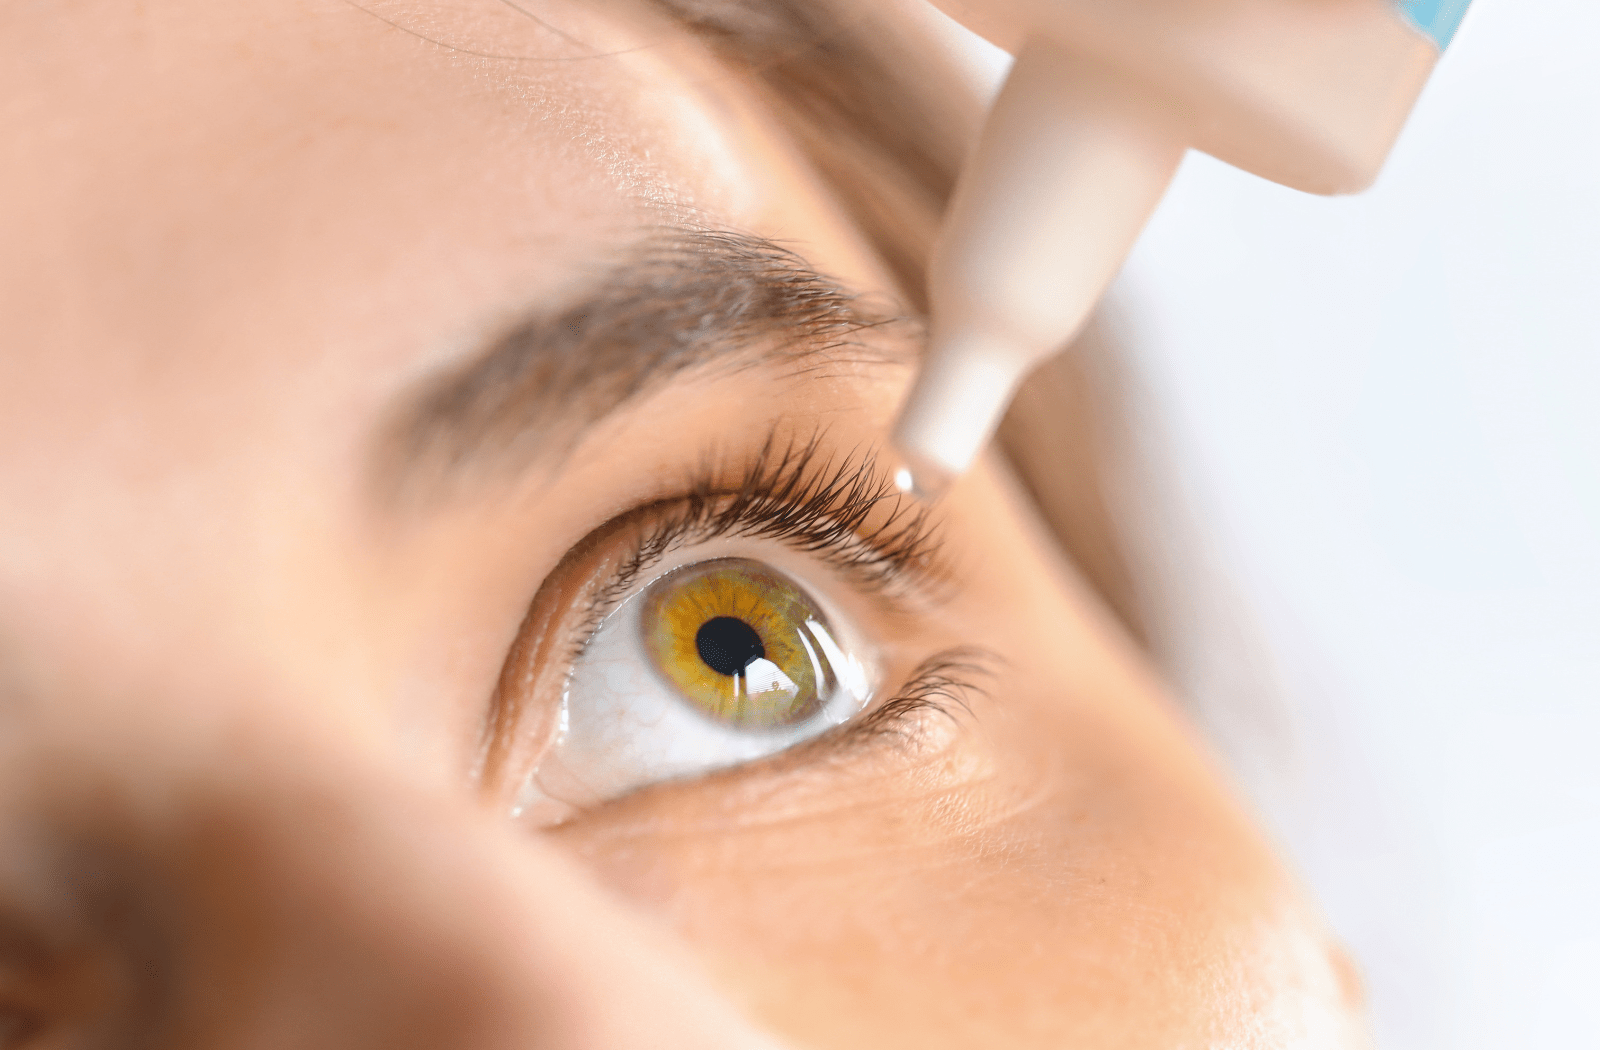 A woman putting eye drops into her eye to treat dry eye